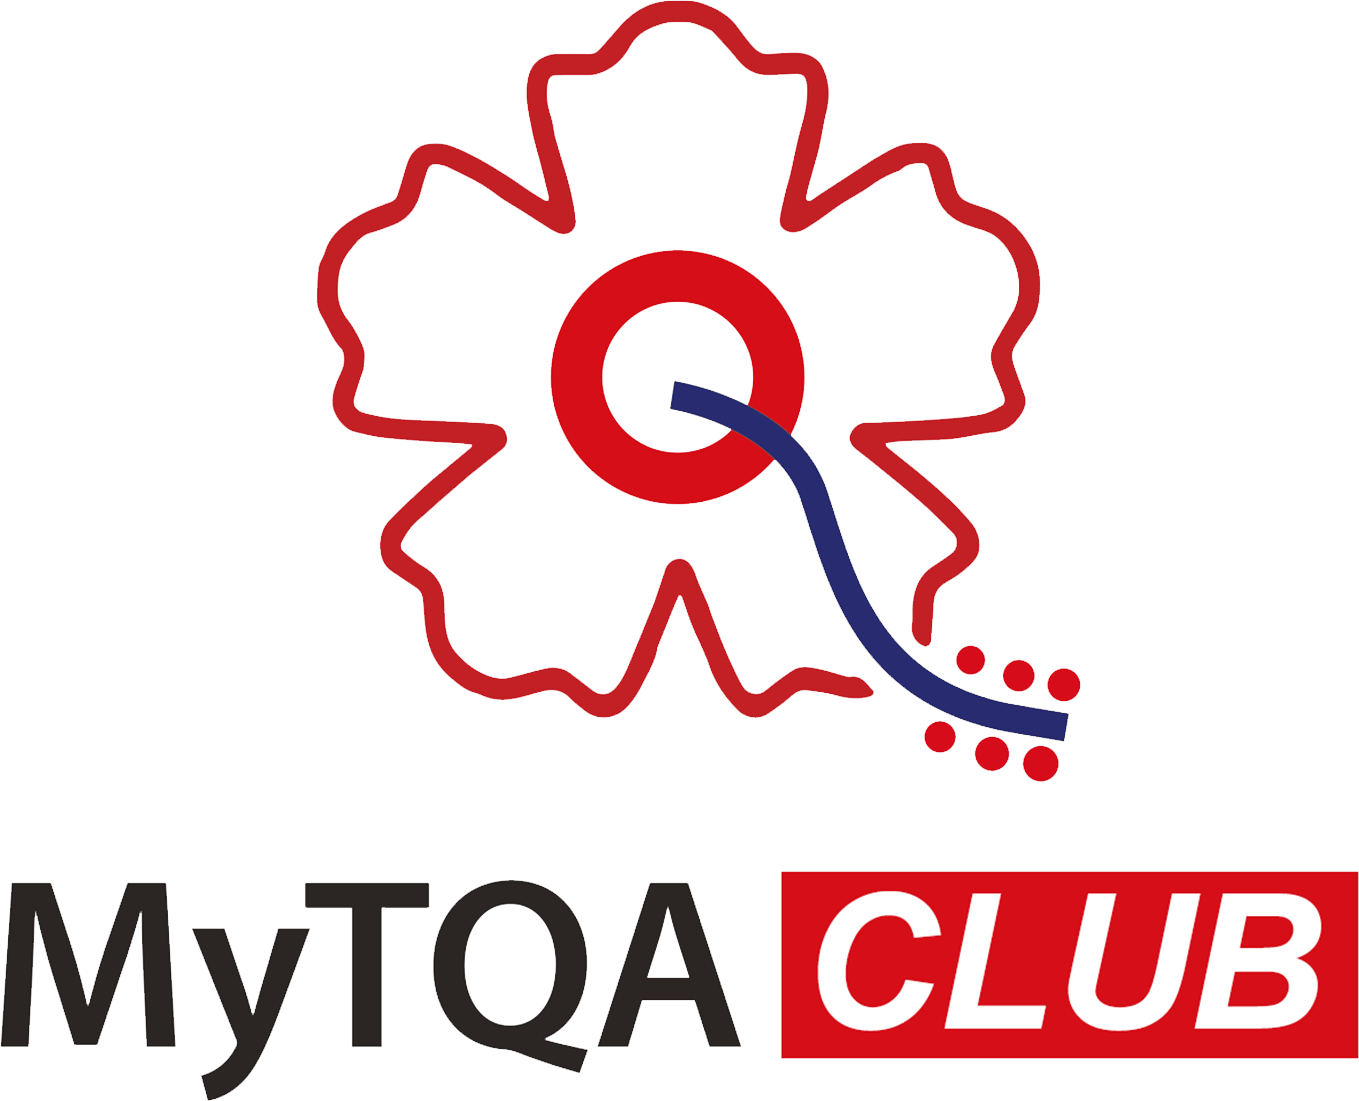 MyTQA Club